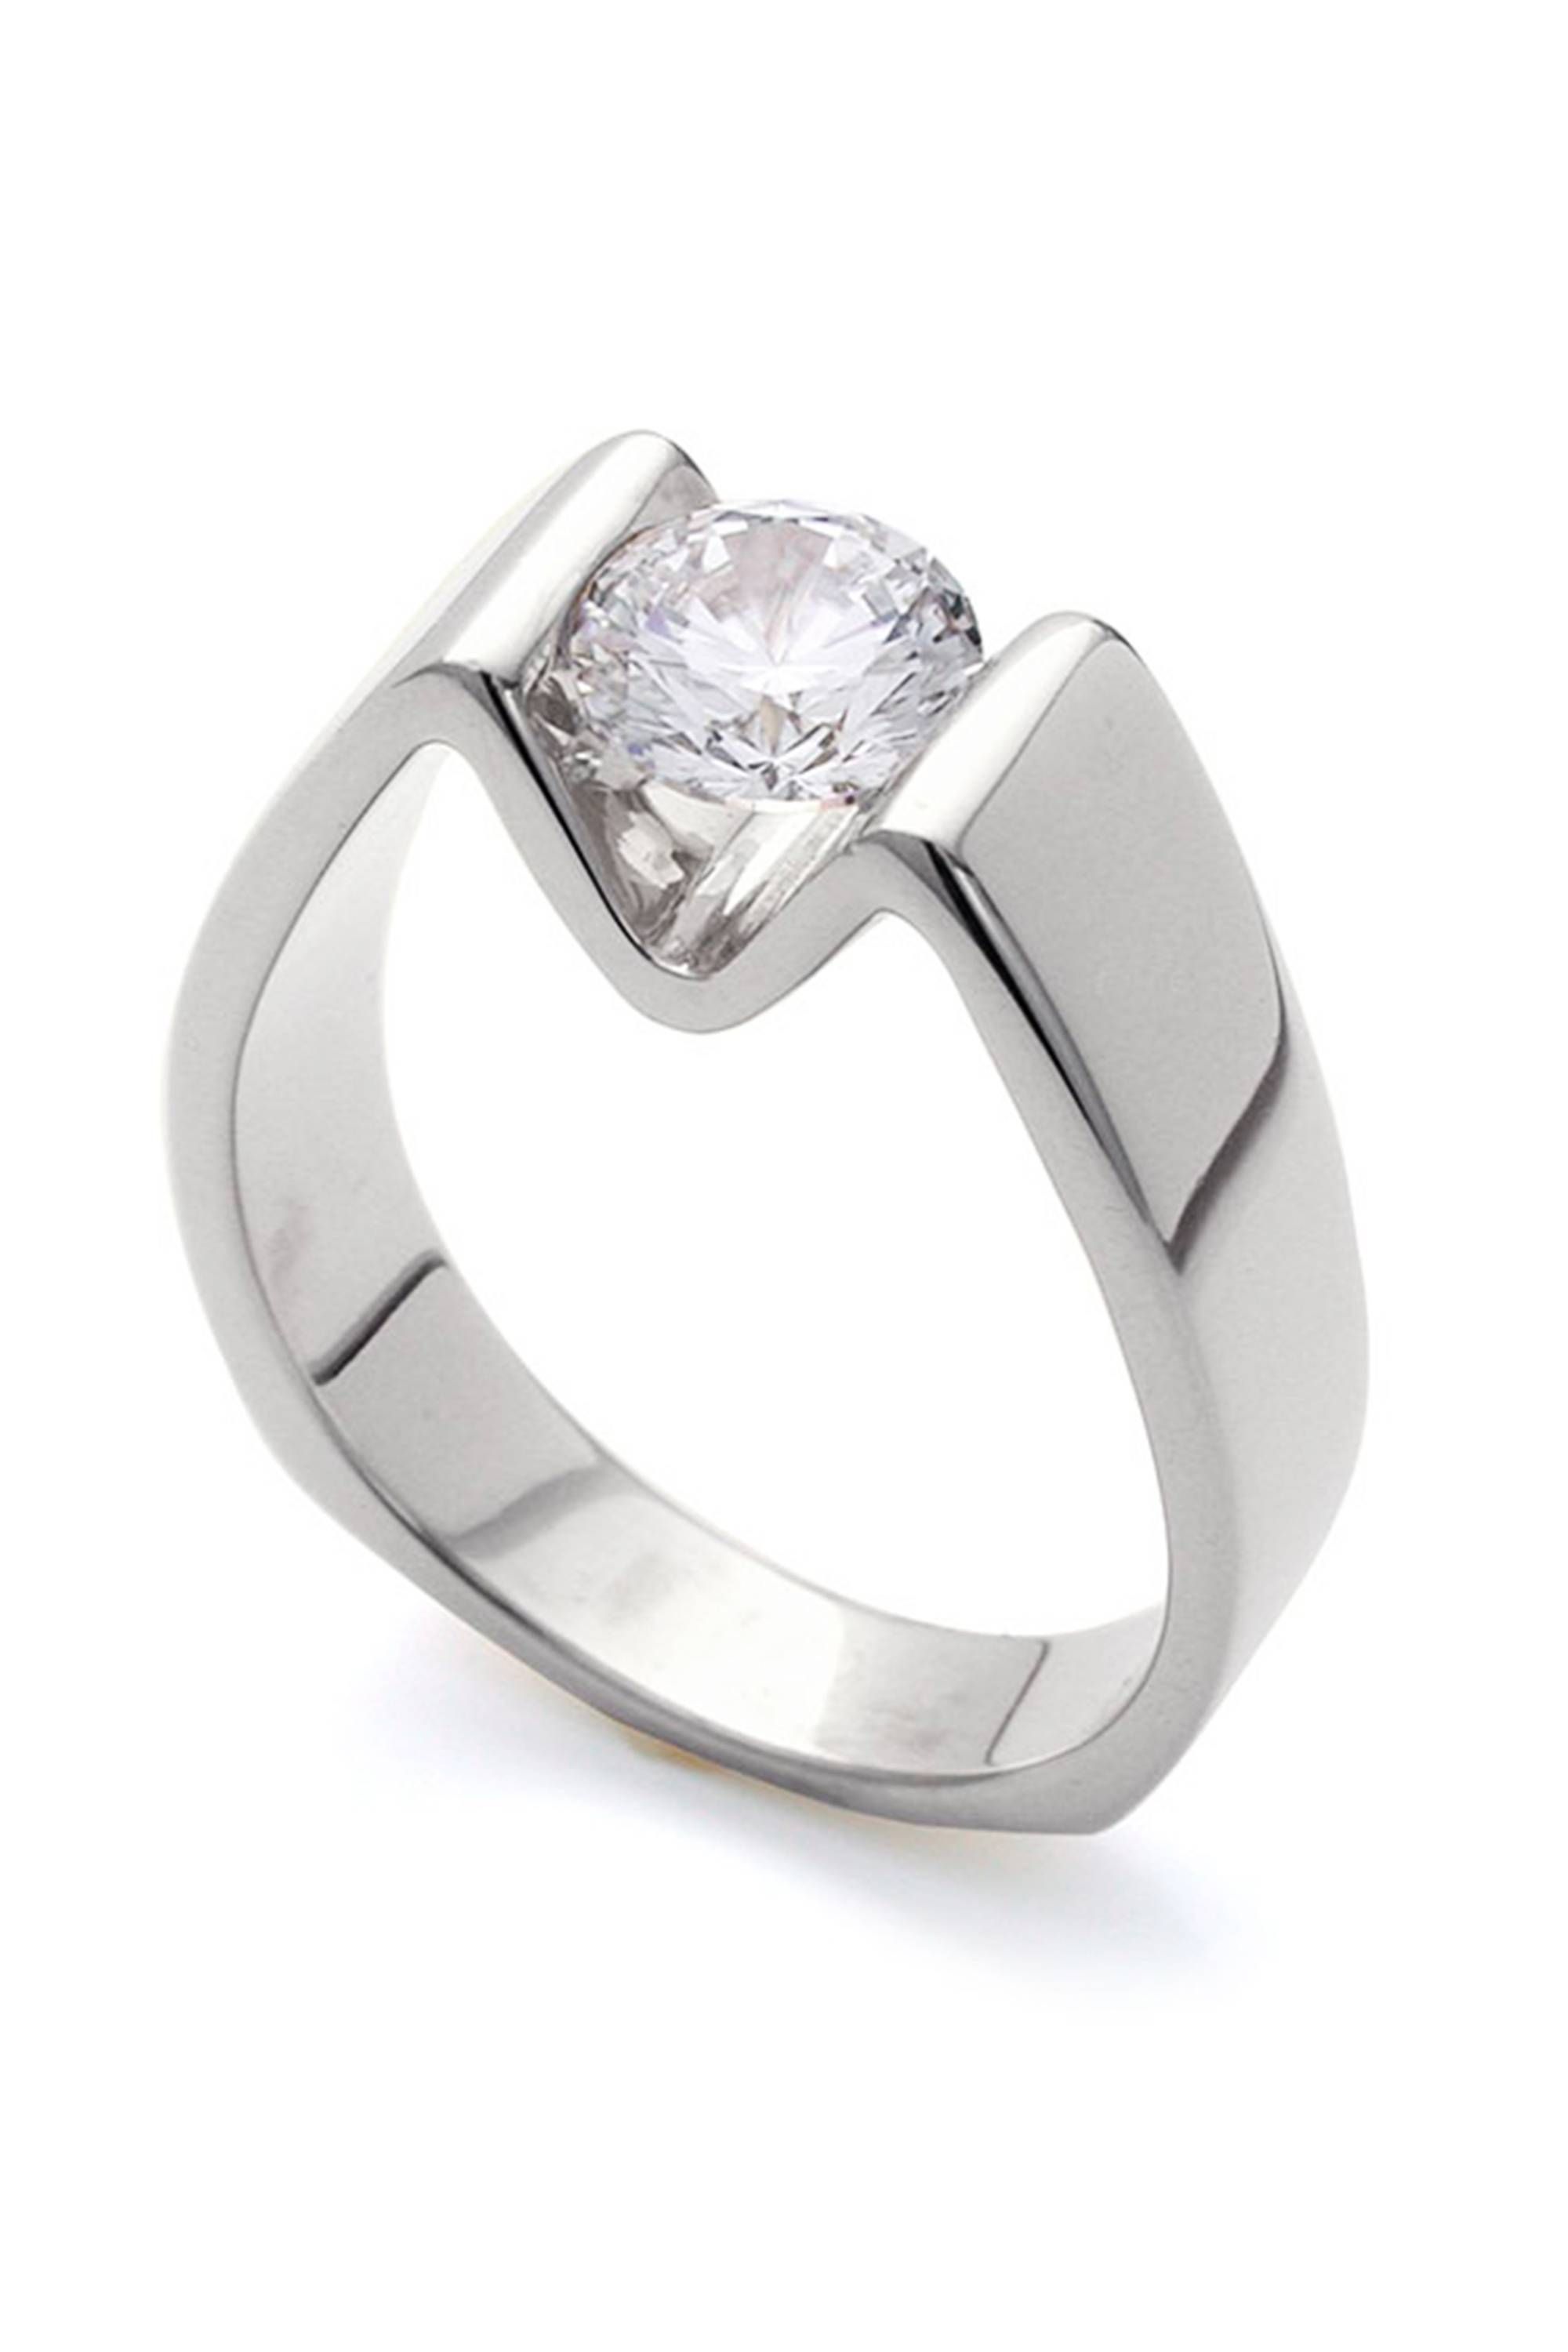 Unusual Diamond Rings | Wedding, Promise, Diamond, Engagement With Regard To Unusual Diamond Wedding Rings (View 3 of 15)